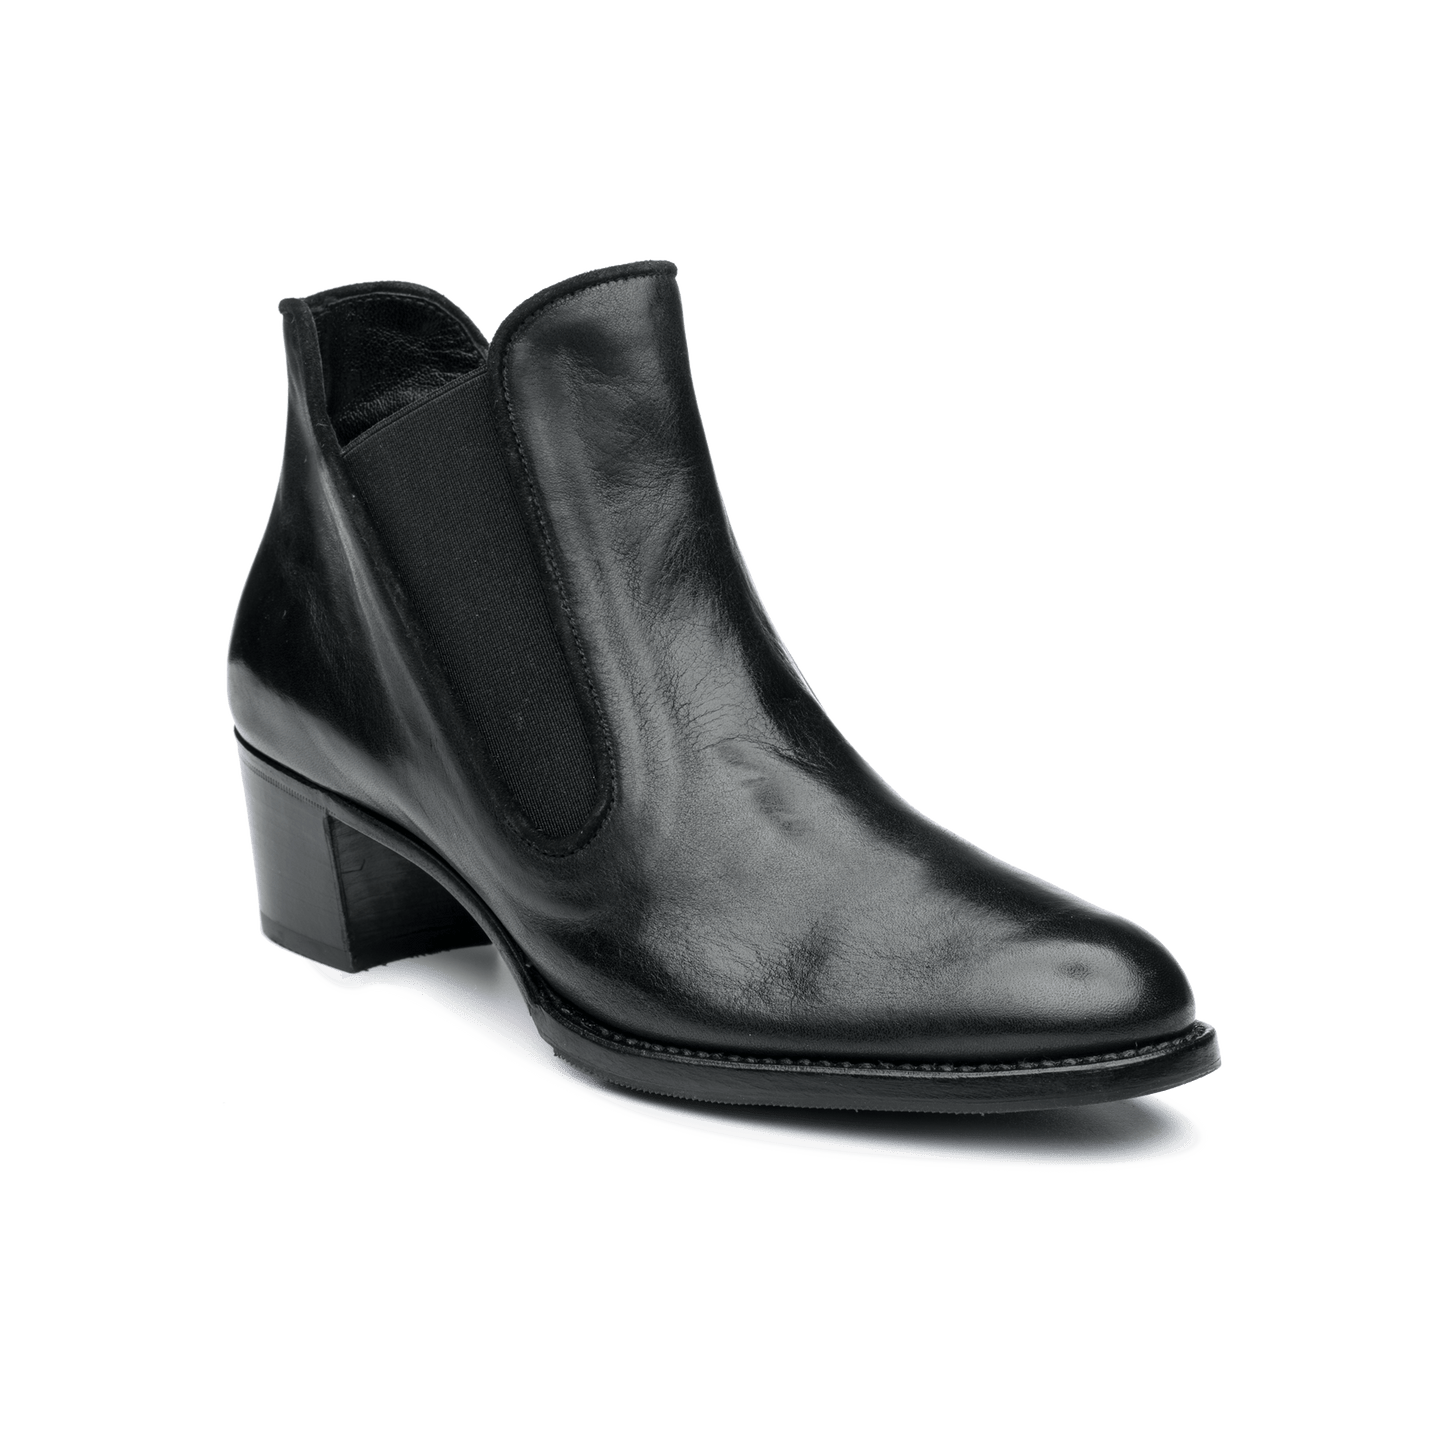 35mm Ellie X Gravati Italian Made Ankle Boot in Black Vachetta